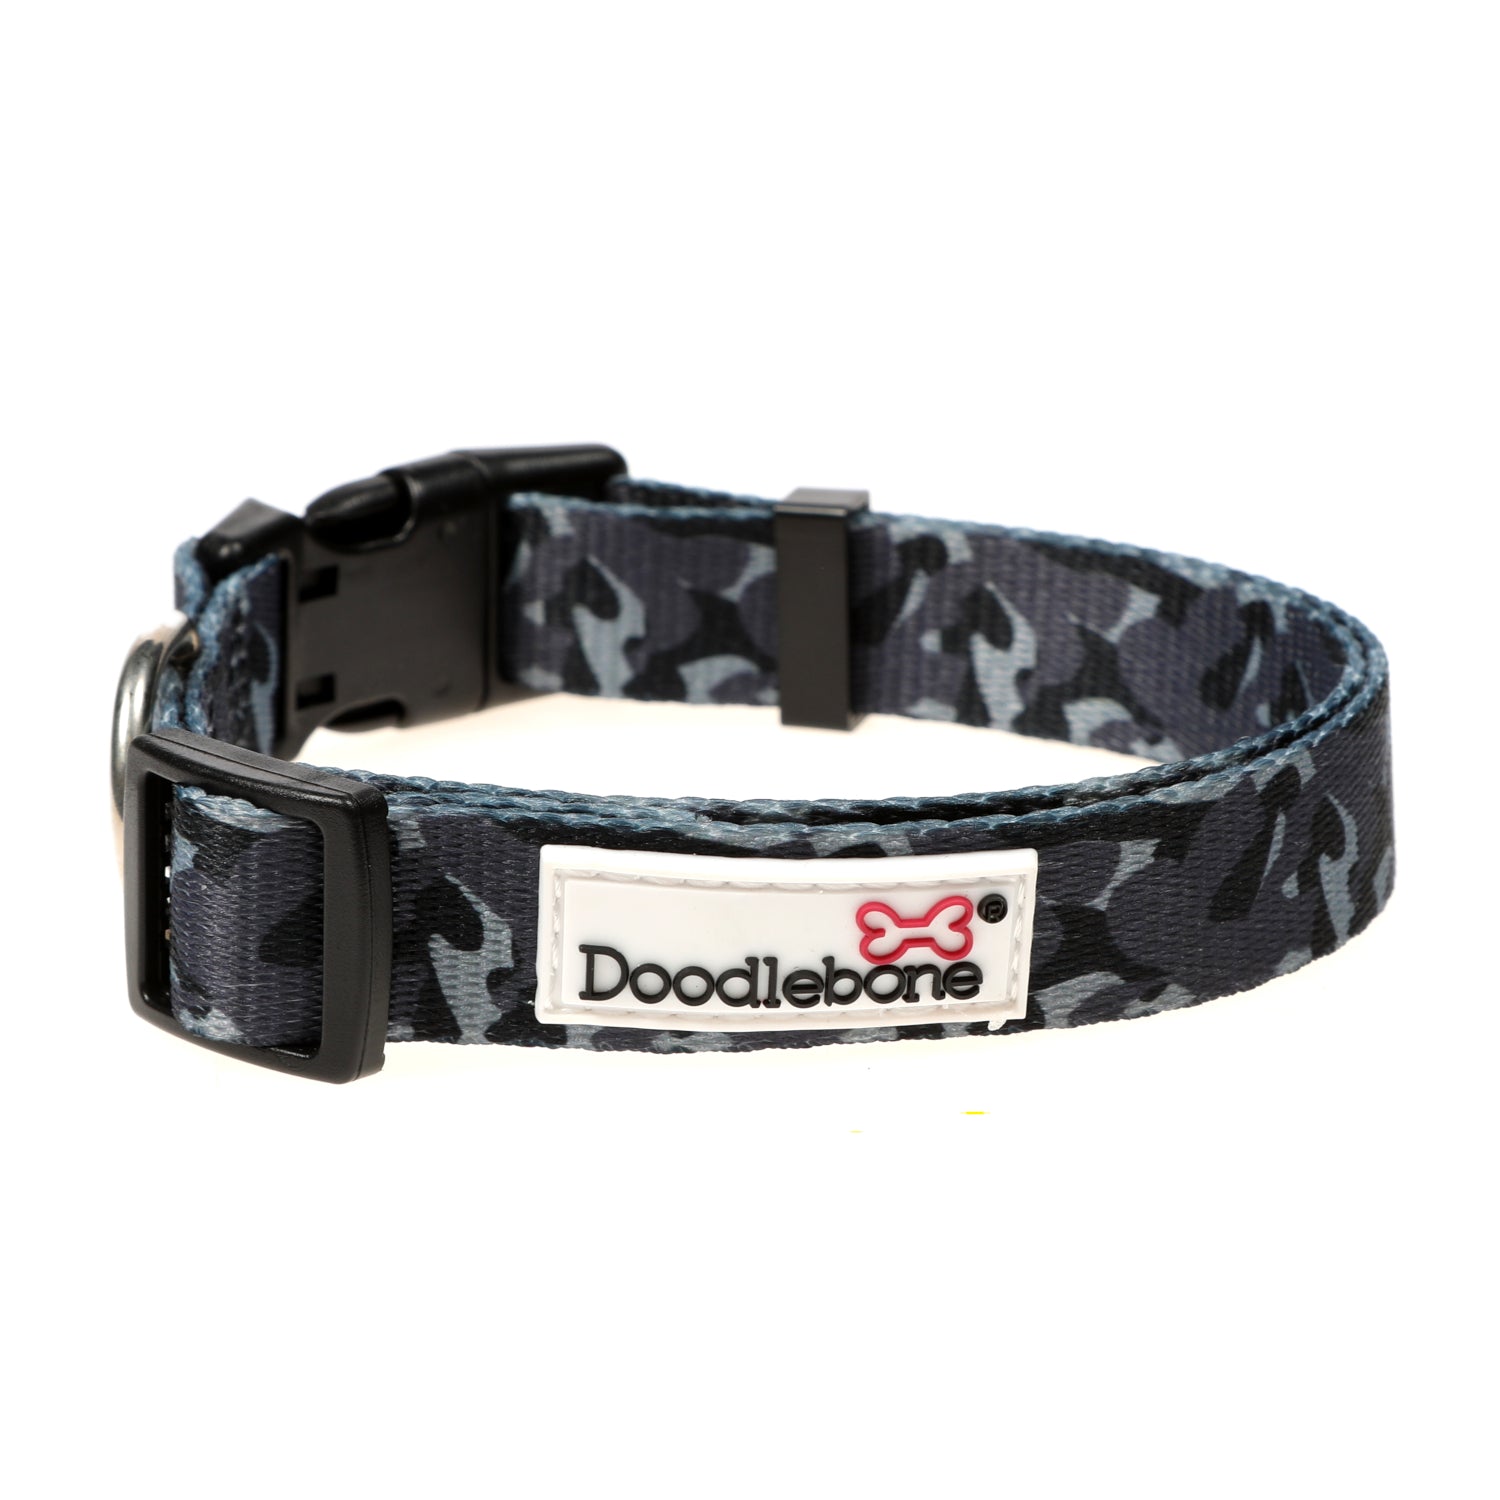 Doodlebone Originals Pattern Dog Collar Smokey Camo 3 Sizes